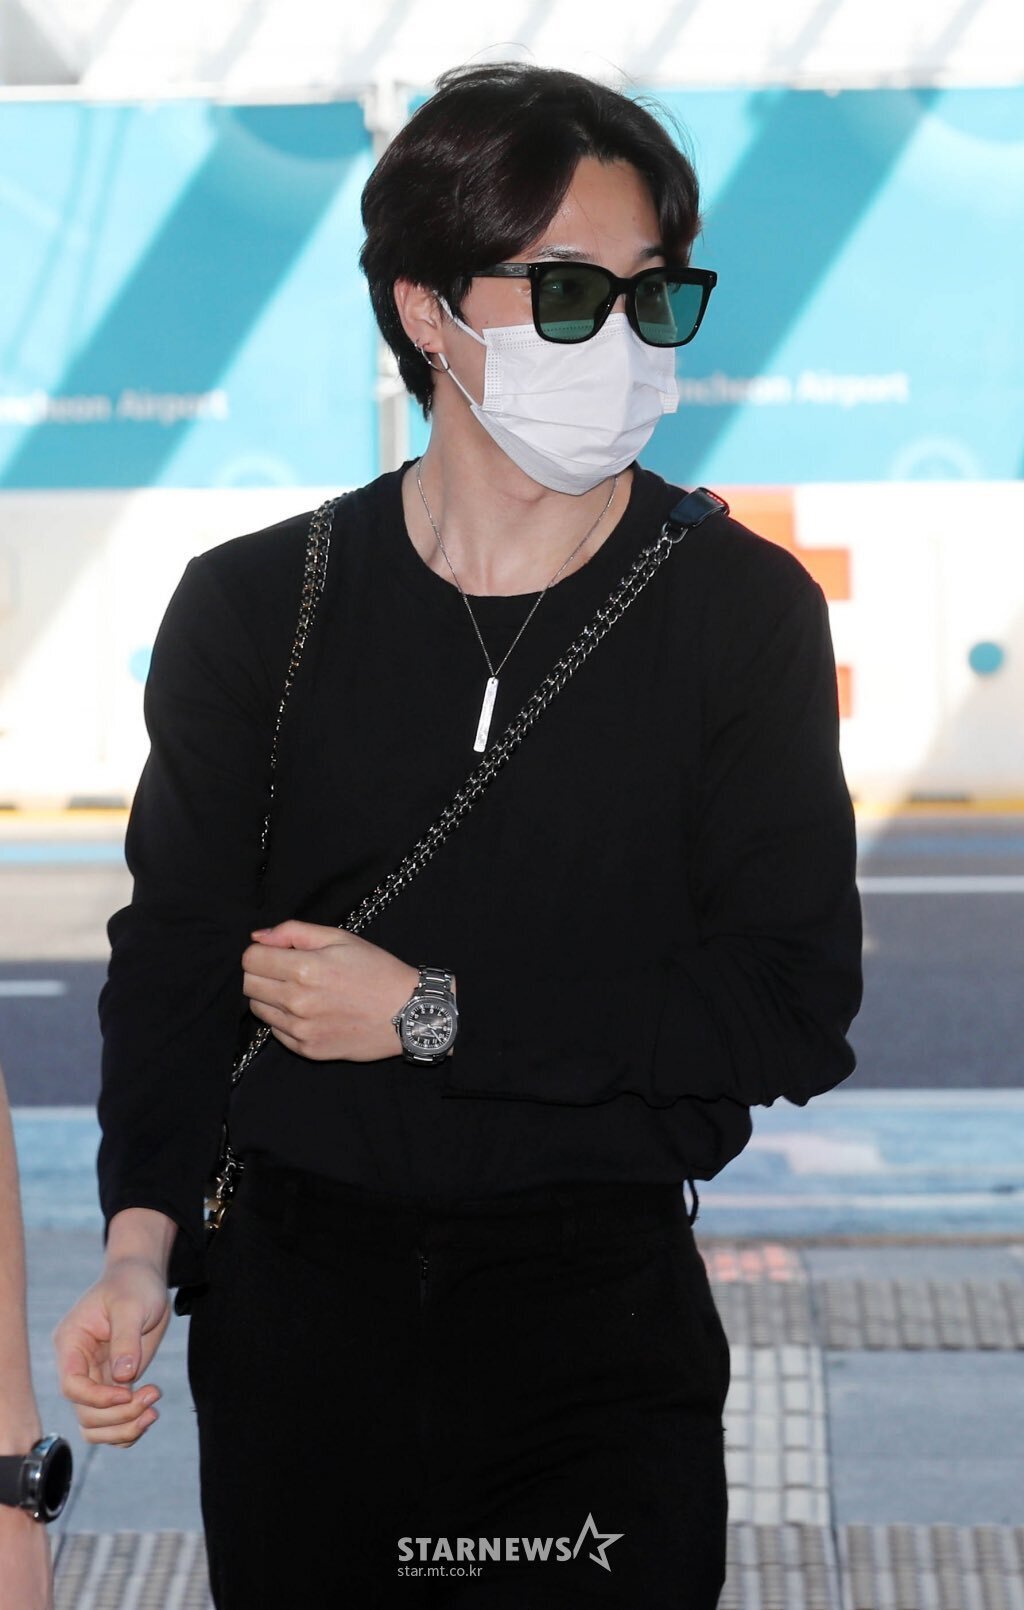 Beyond The Style ✼ Alex ✼ on X: JIMIN #JIMIN 181024 airport #BTS #지민  #방탄소년단 CHANEL maxi shopping bag in black/ pink/ blue, approx 7900 usd   / X